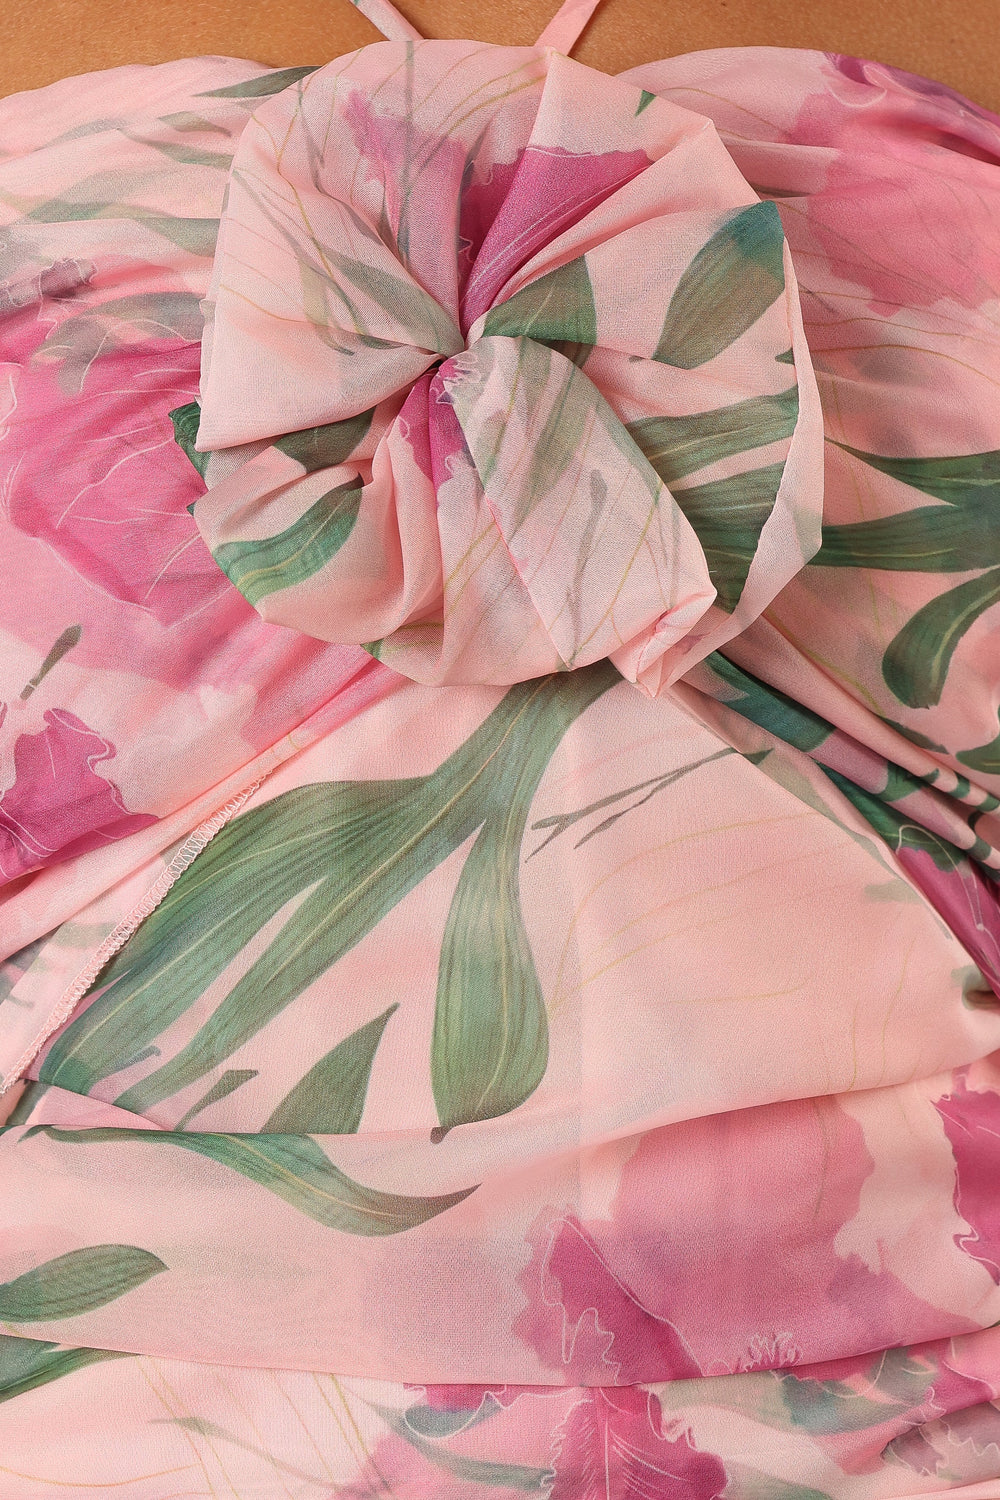 DRESSES @Zuri Rosette Mini Dress - Pink Floral (Hold for Modern Romance)